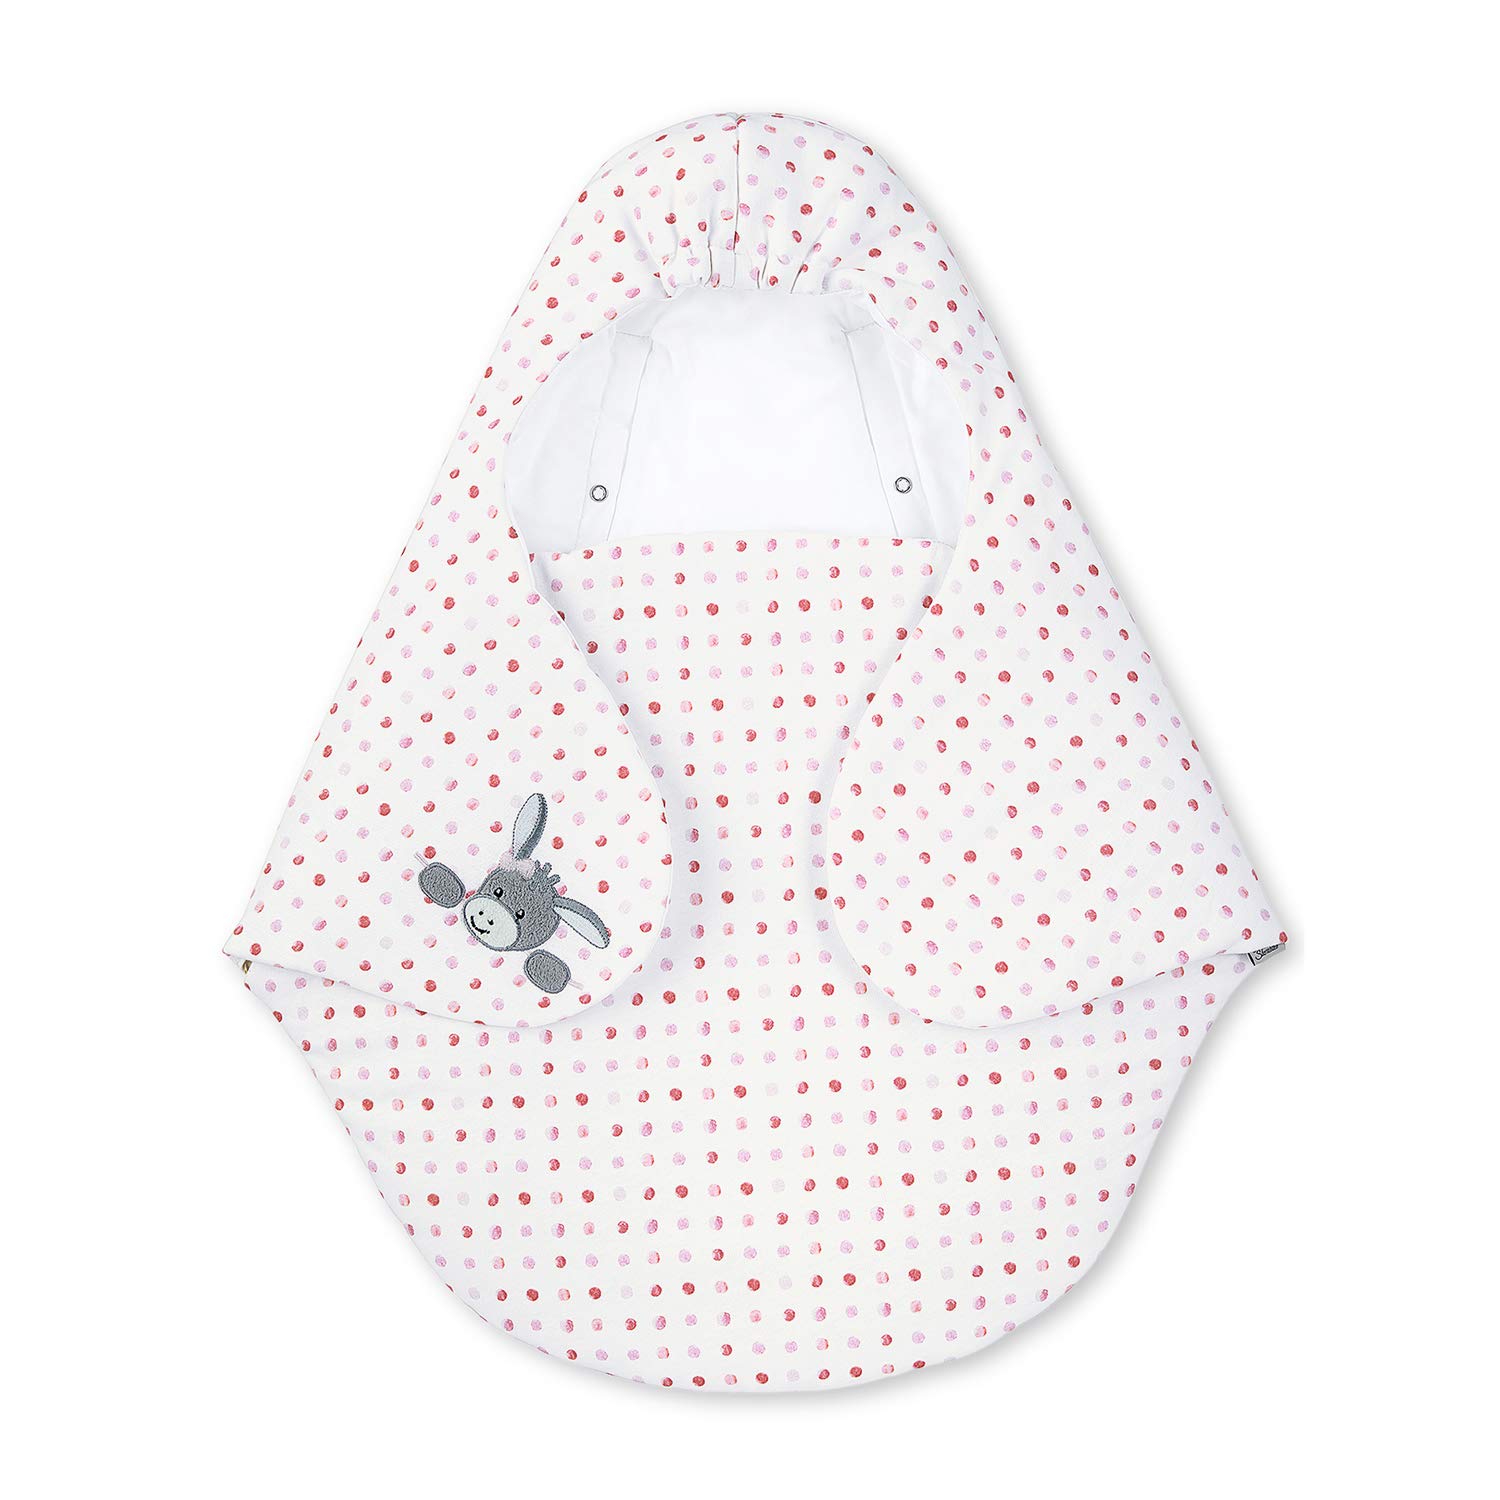 Sterntaler Cuddly Zoo Blanket, Padded, Elephant Design, Suitable For Babies